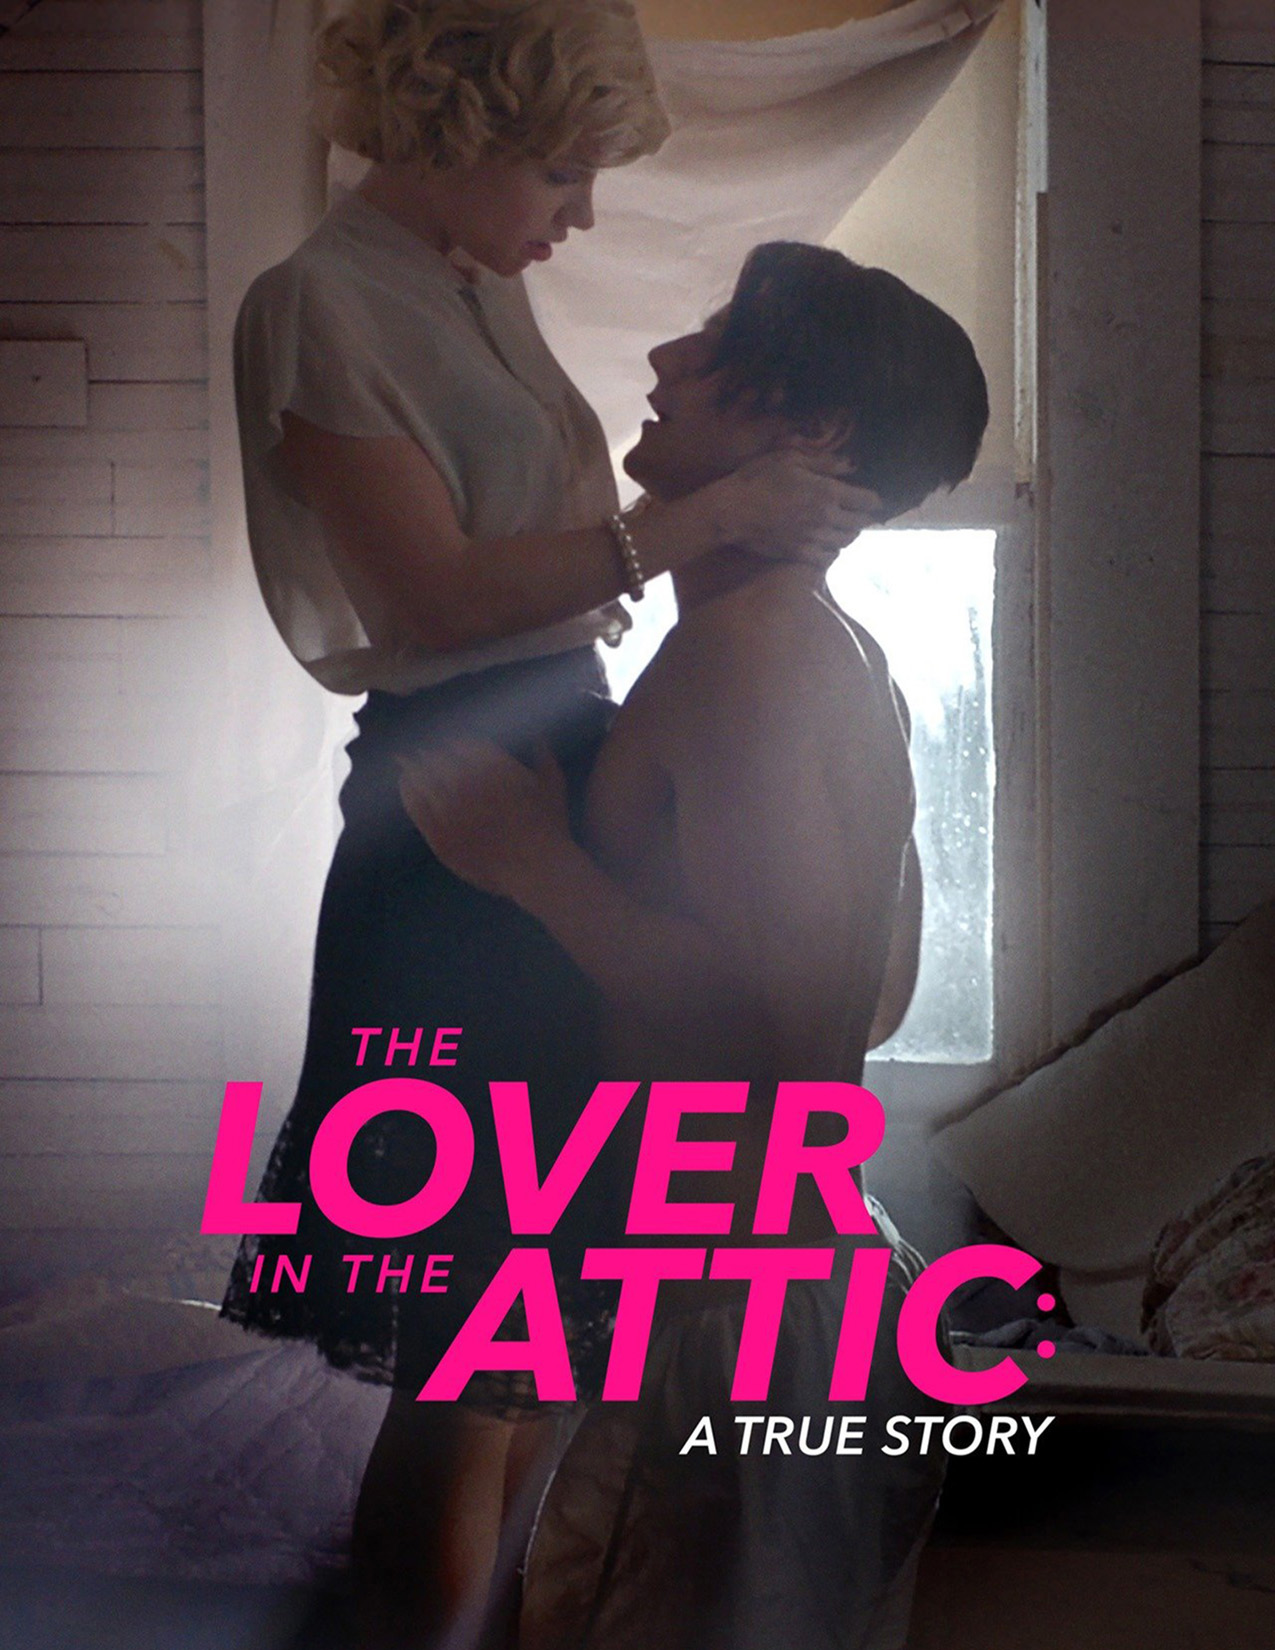 The Lover in the Attic: A True Story (2018) starring Molly Burnett on DVD on DVD